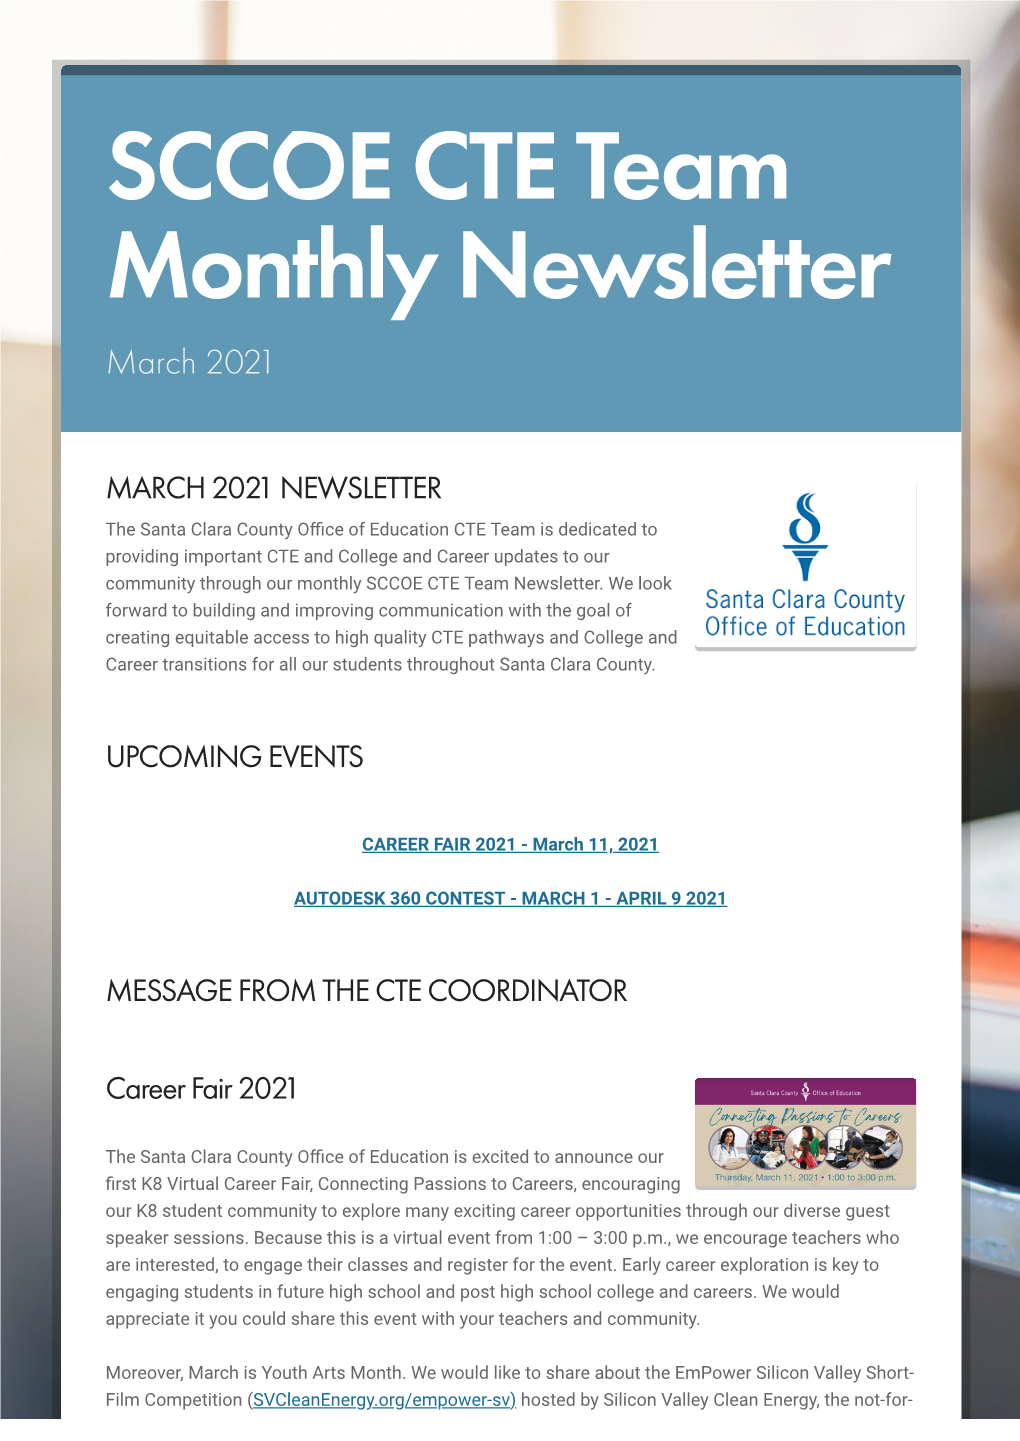 SCCOE CTE Team Monthly Newsletter March 2021